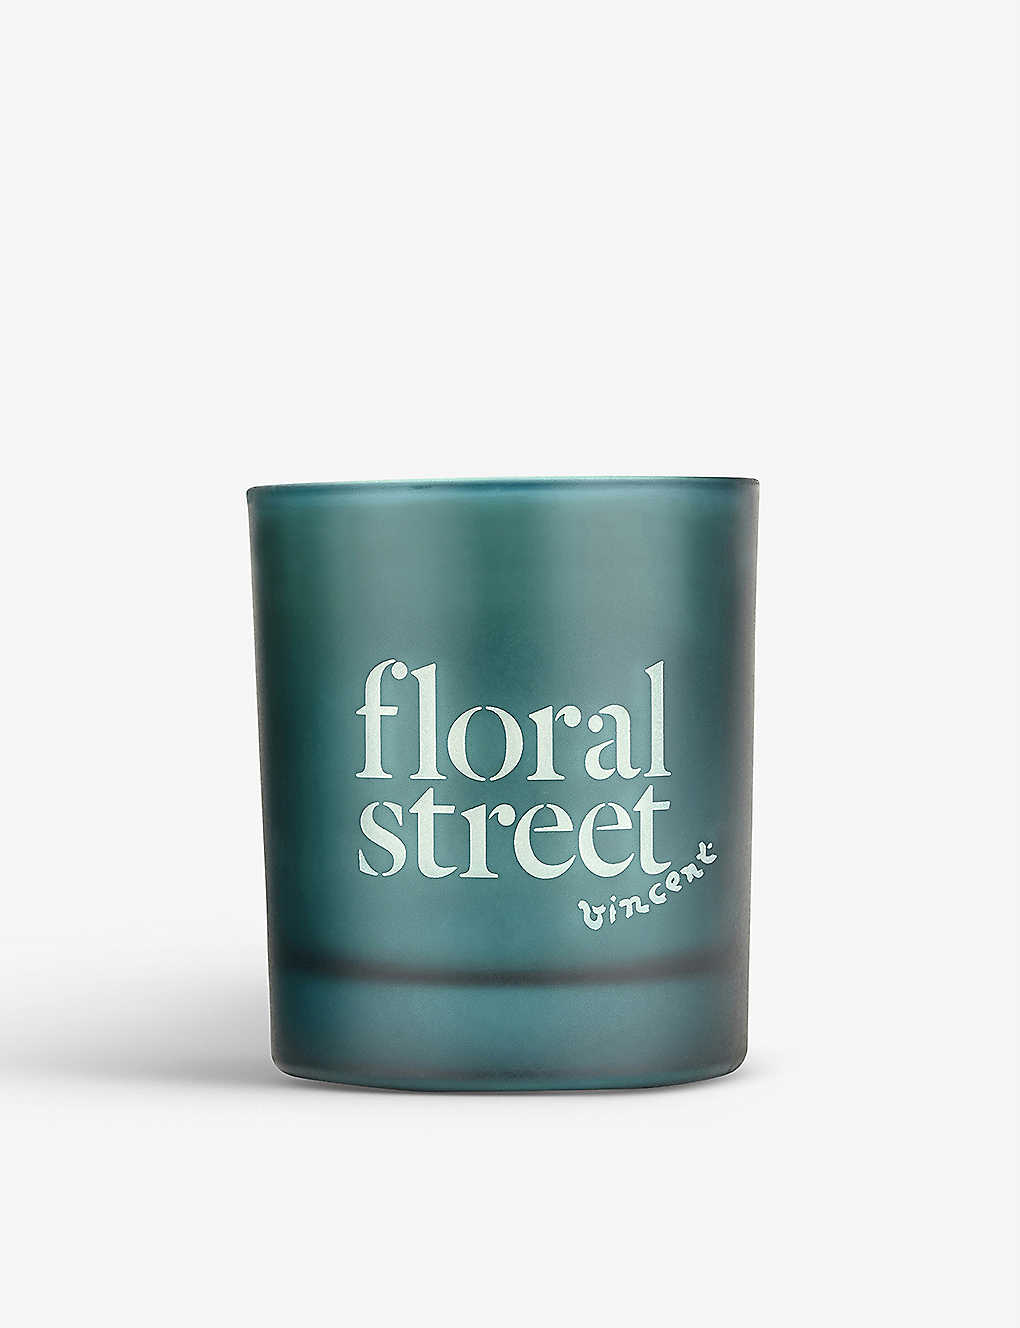 FLORAL STREET フローラルストリート&ヴァンゴッホミュージアム アーモンドブロッサム キャンドル 200g Floral Street x Van Gogh Museum Almond Blossom candle 200g